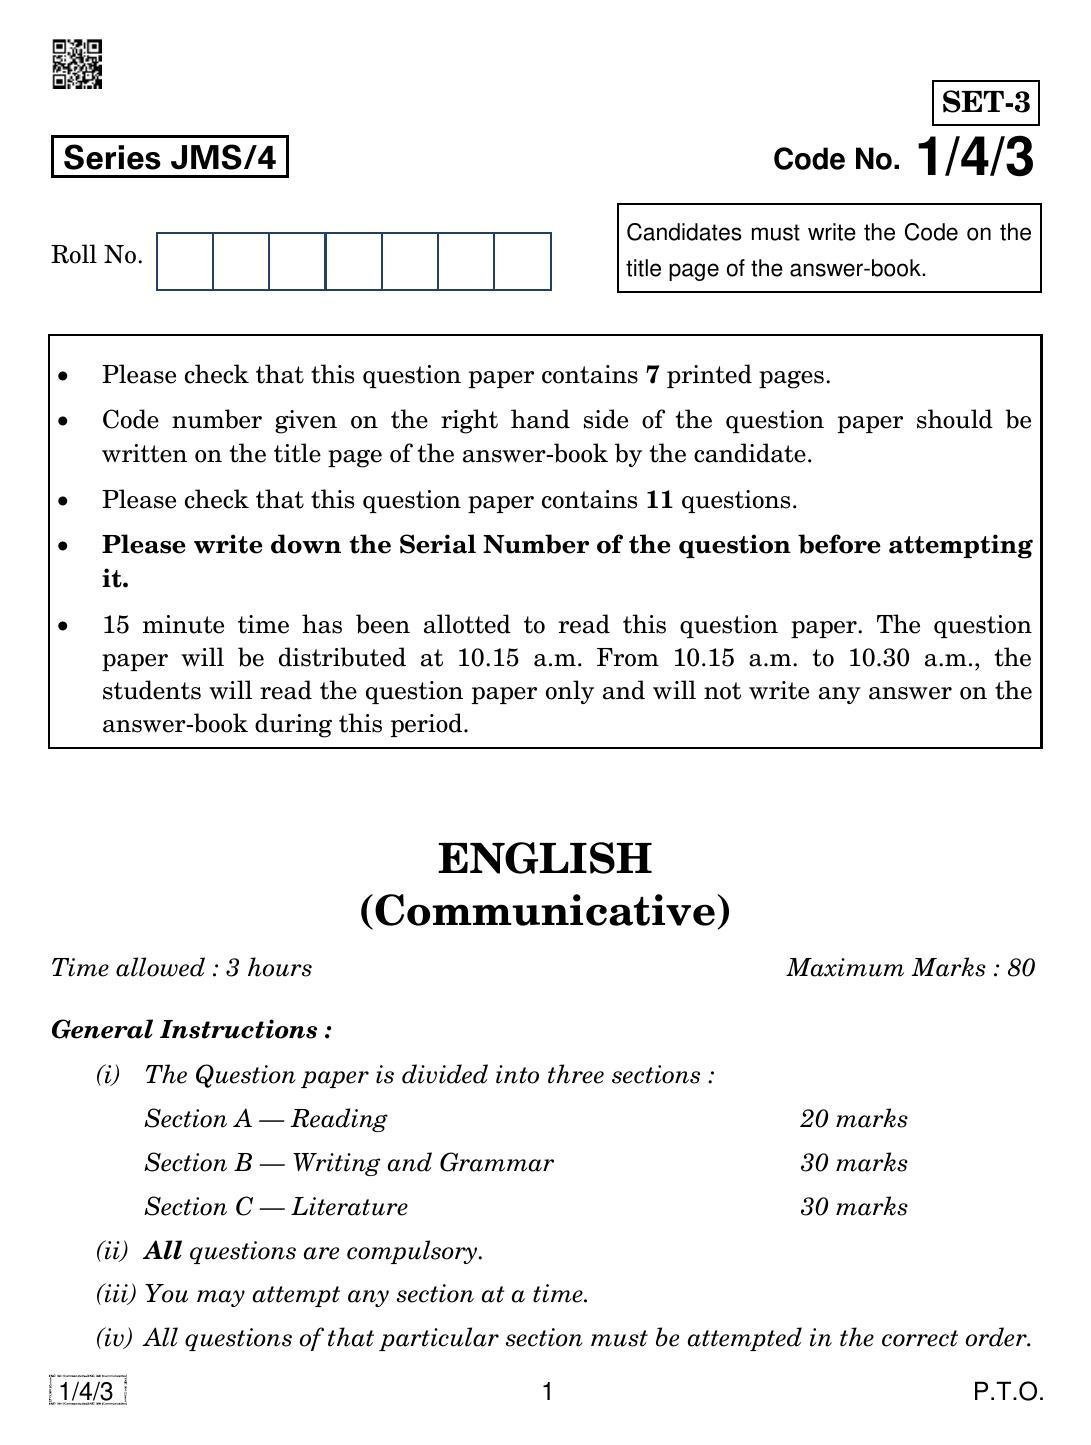 CBSE Class 10 1-4-3 ENGLISH COMMUNICATIVE 2019 Question Paper - Page 1